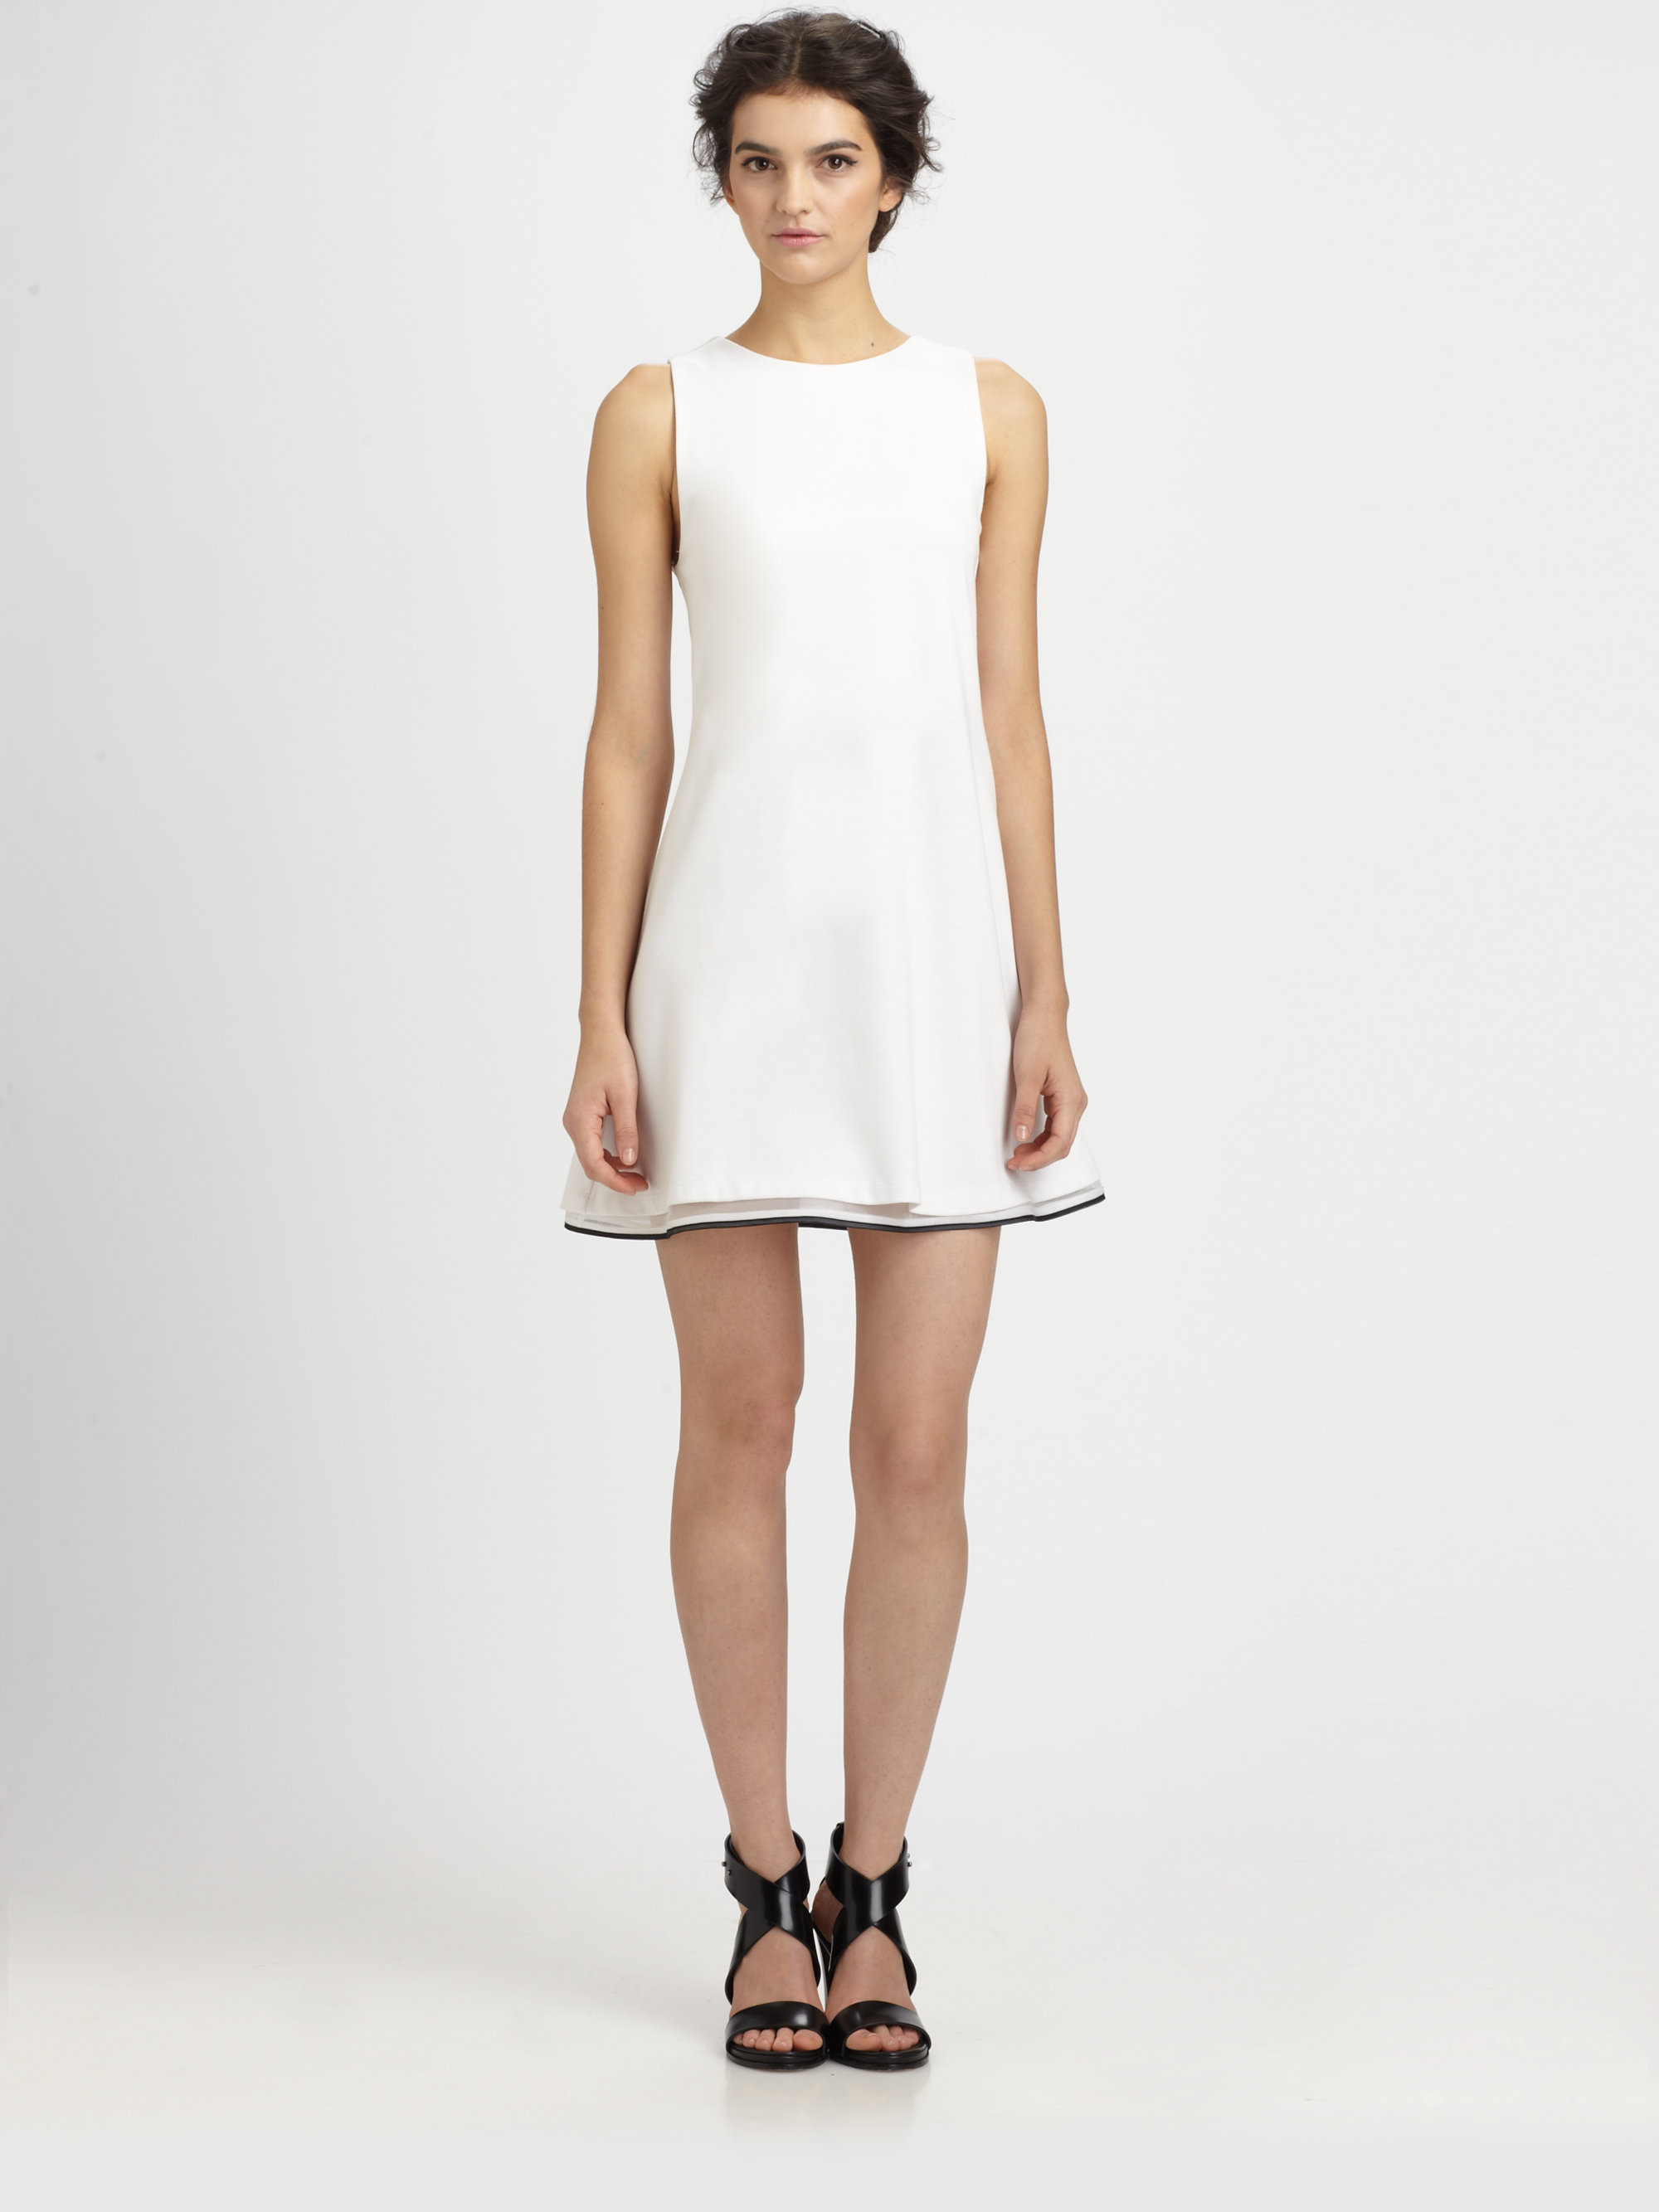 Lyst - Alice + olivia Stella A-Line Shift Dress in White